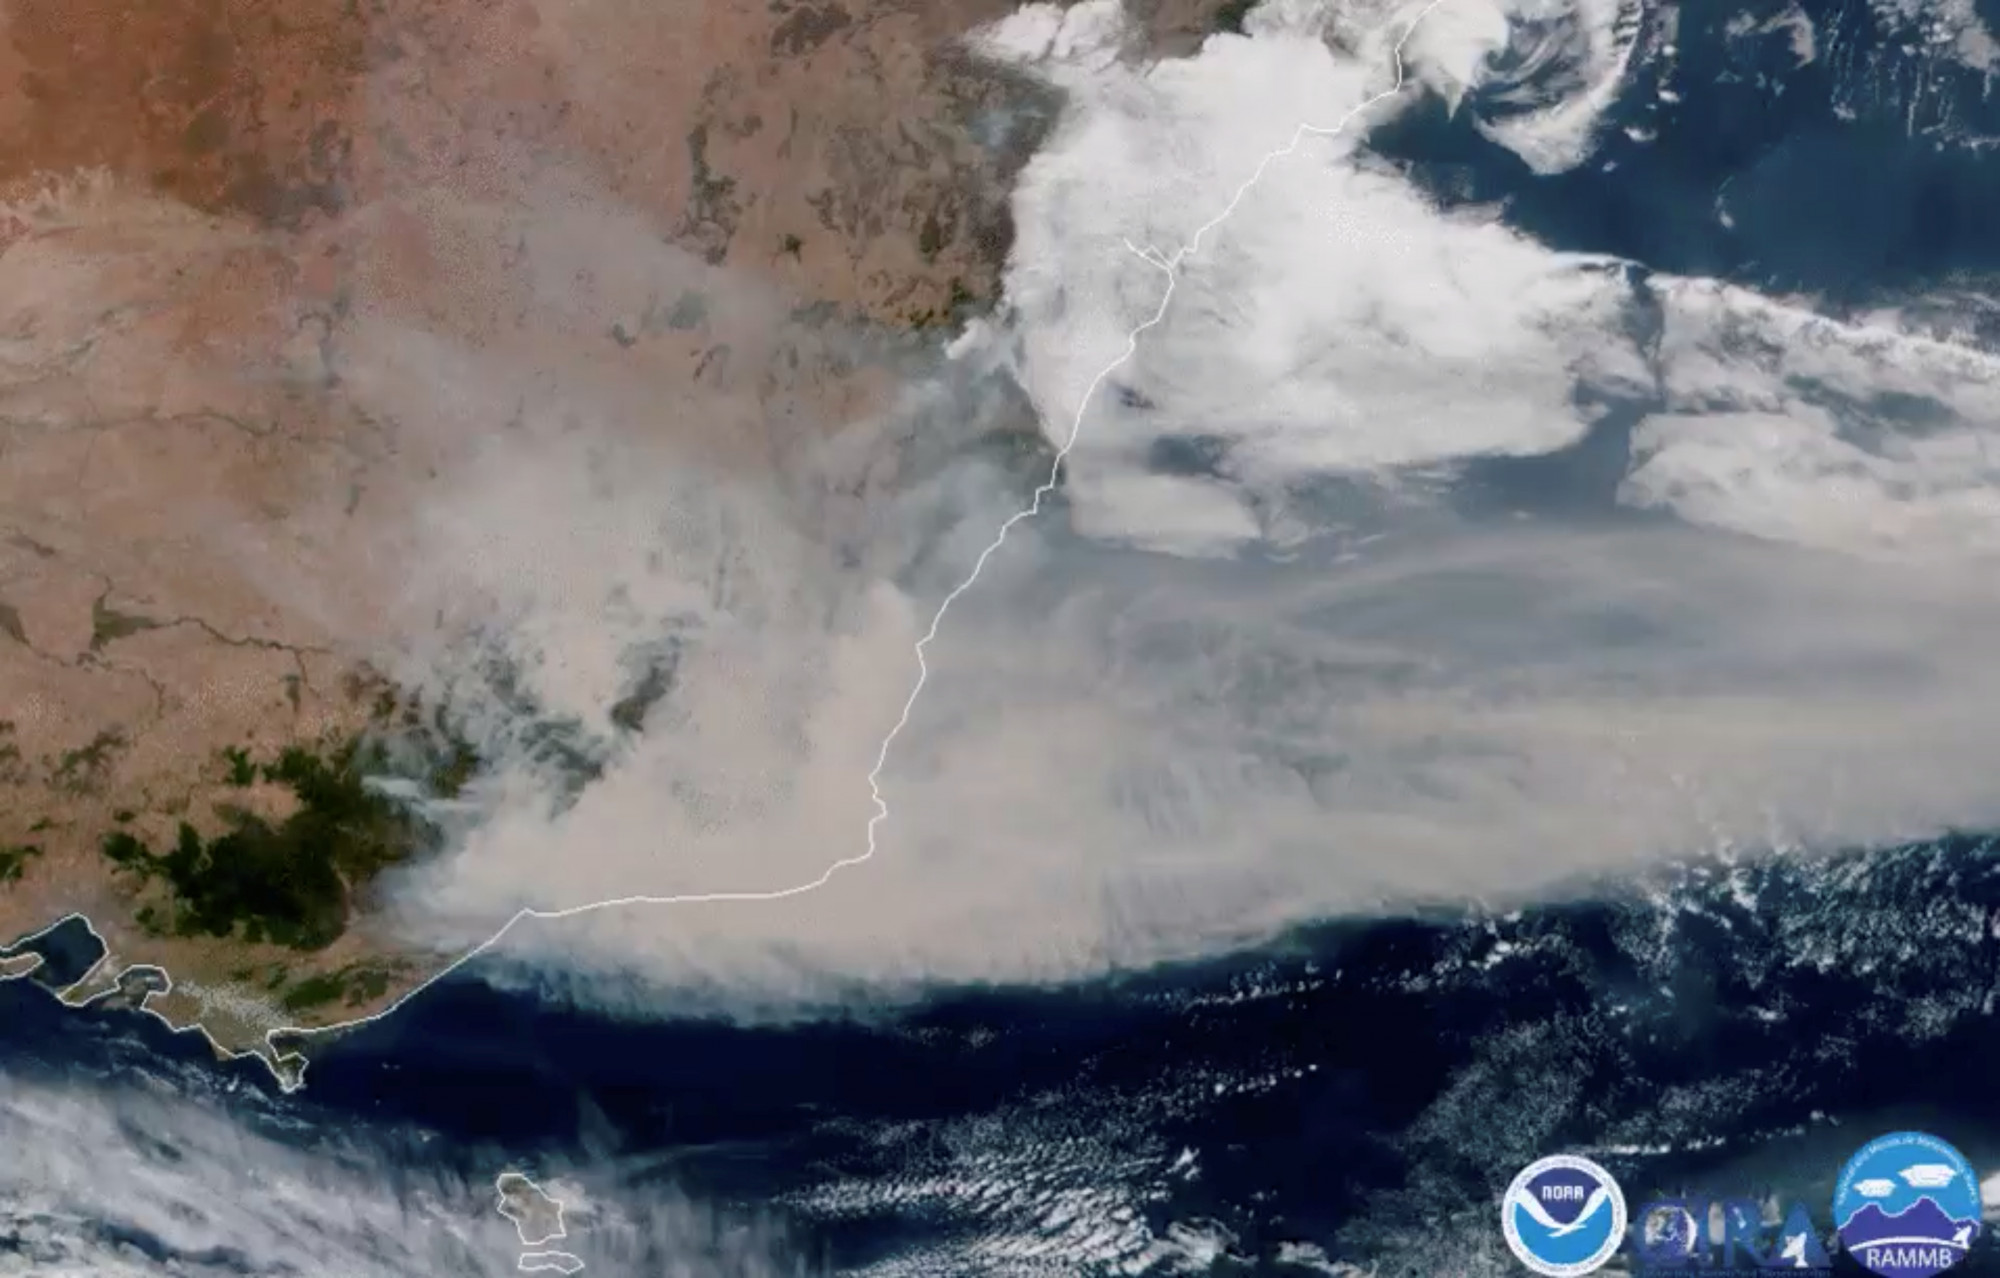 A satellite image shows bushfire smoke being blown away